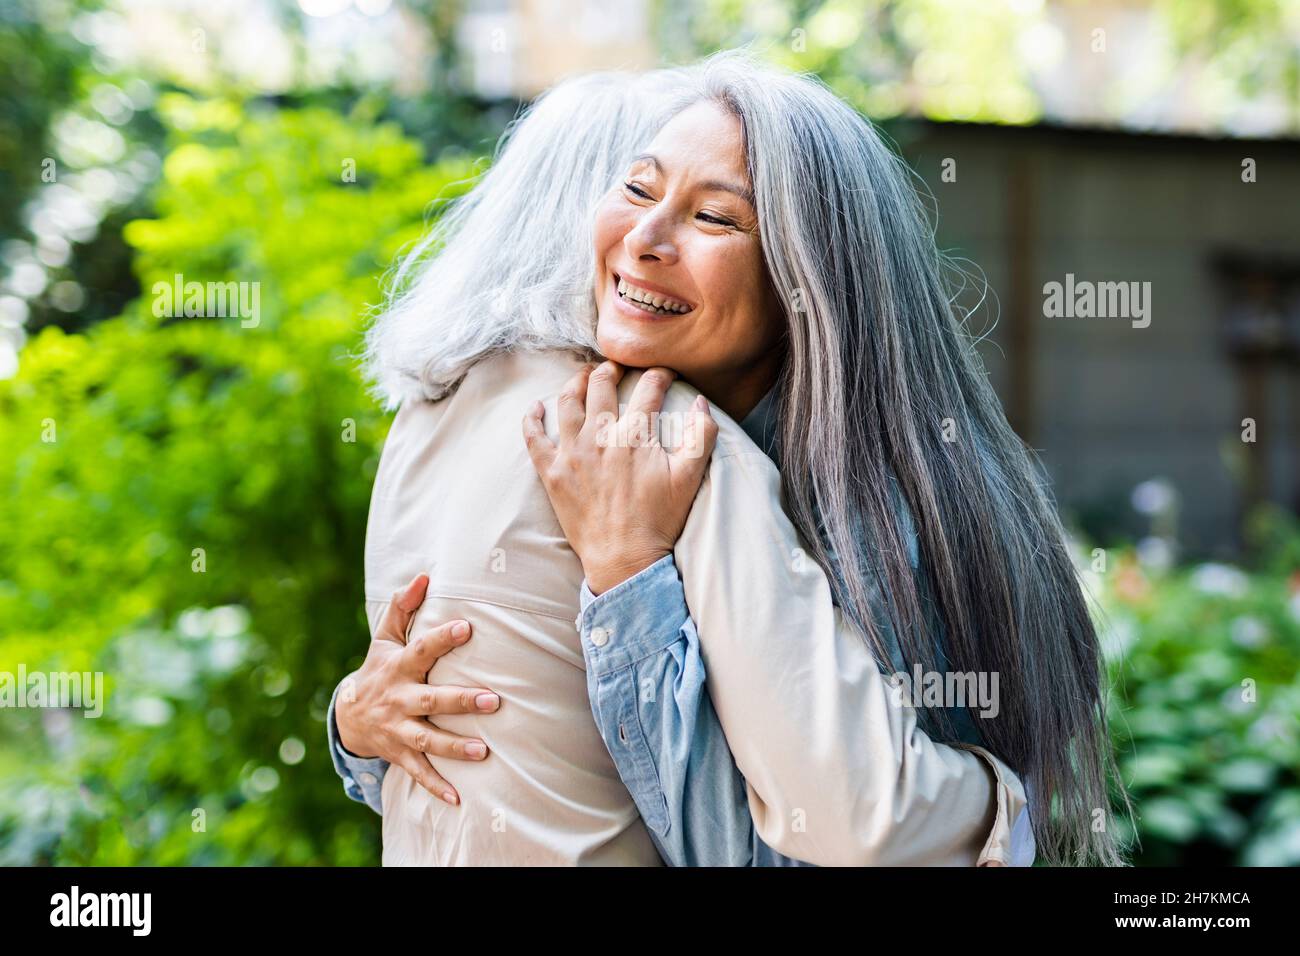 Reife Frauen mit langen Haaren umarmt weibliche Freundin Stockfoto